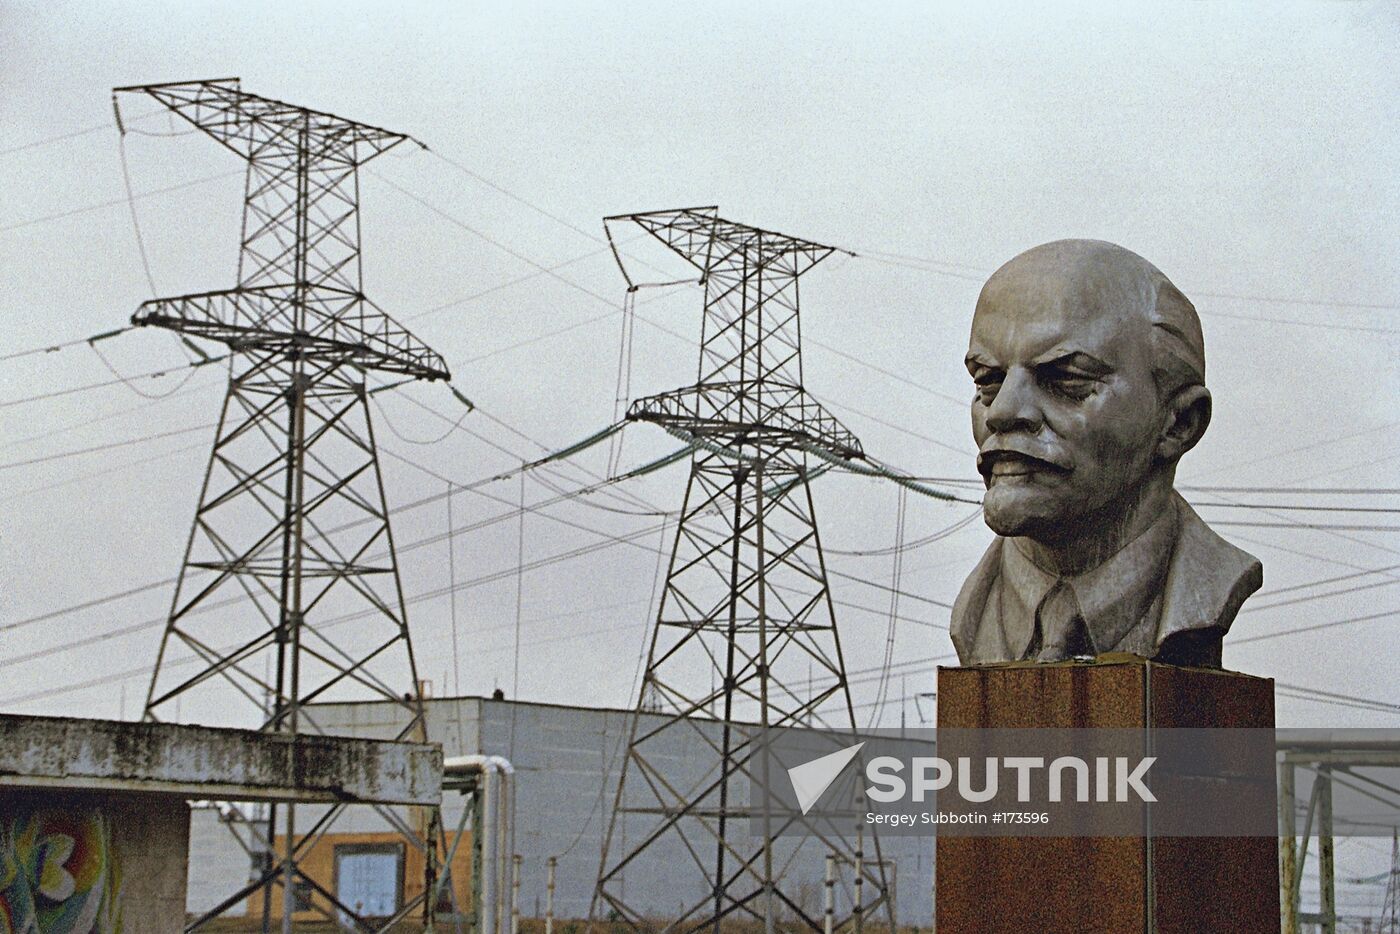 Chernobyl nuclear power plant Lenin